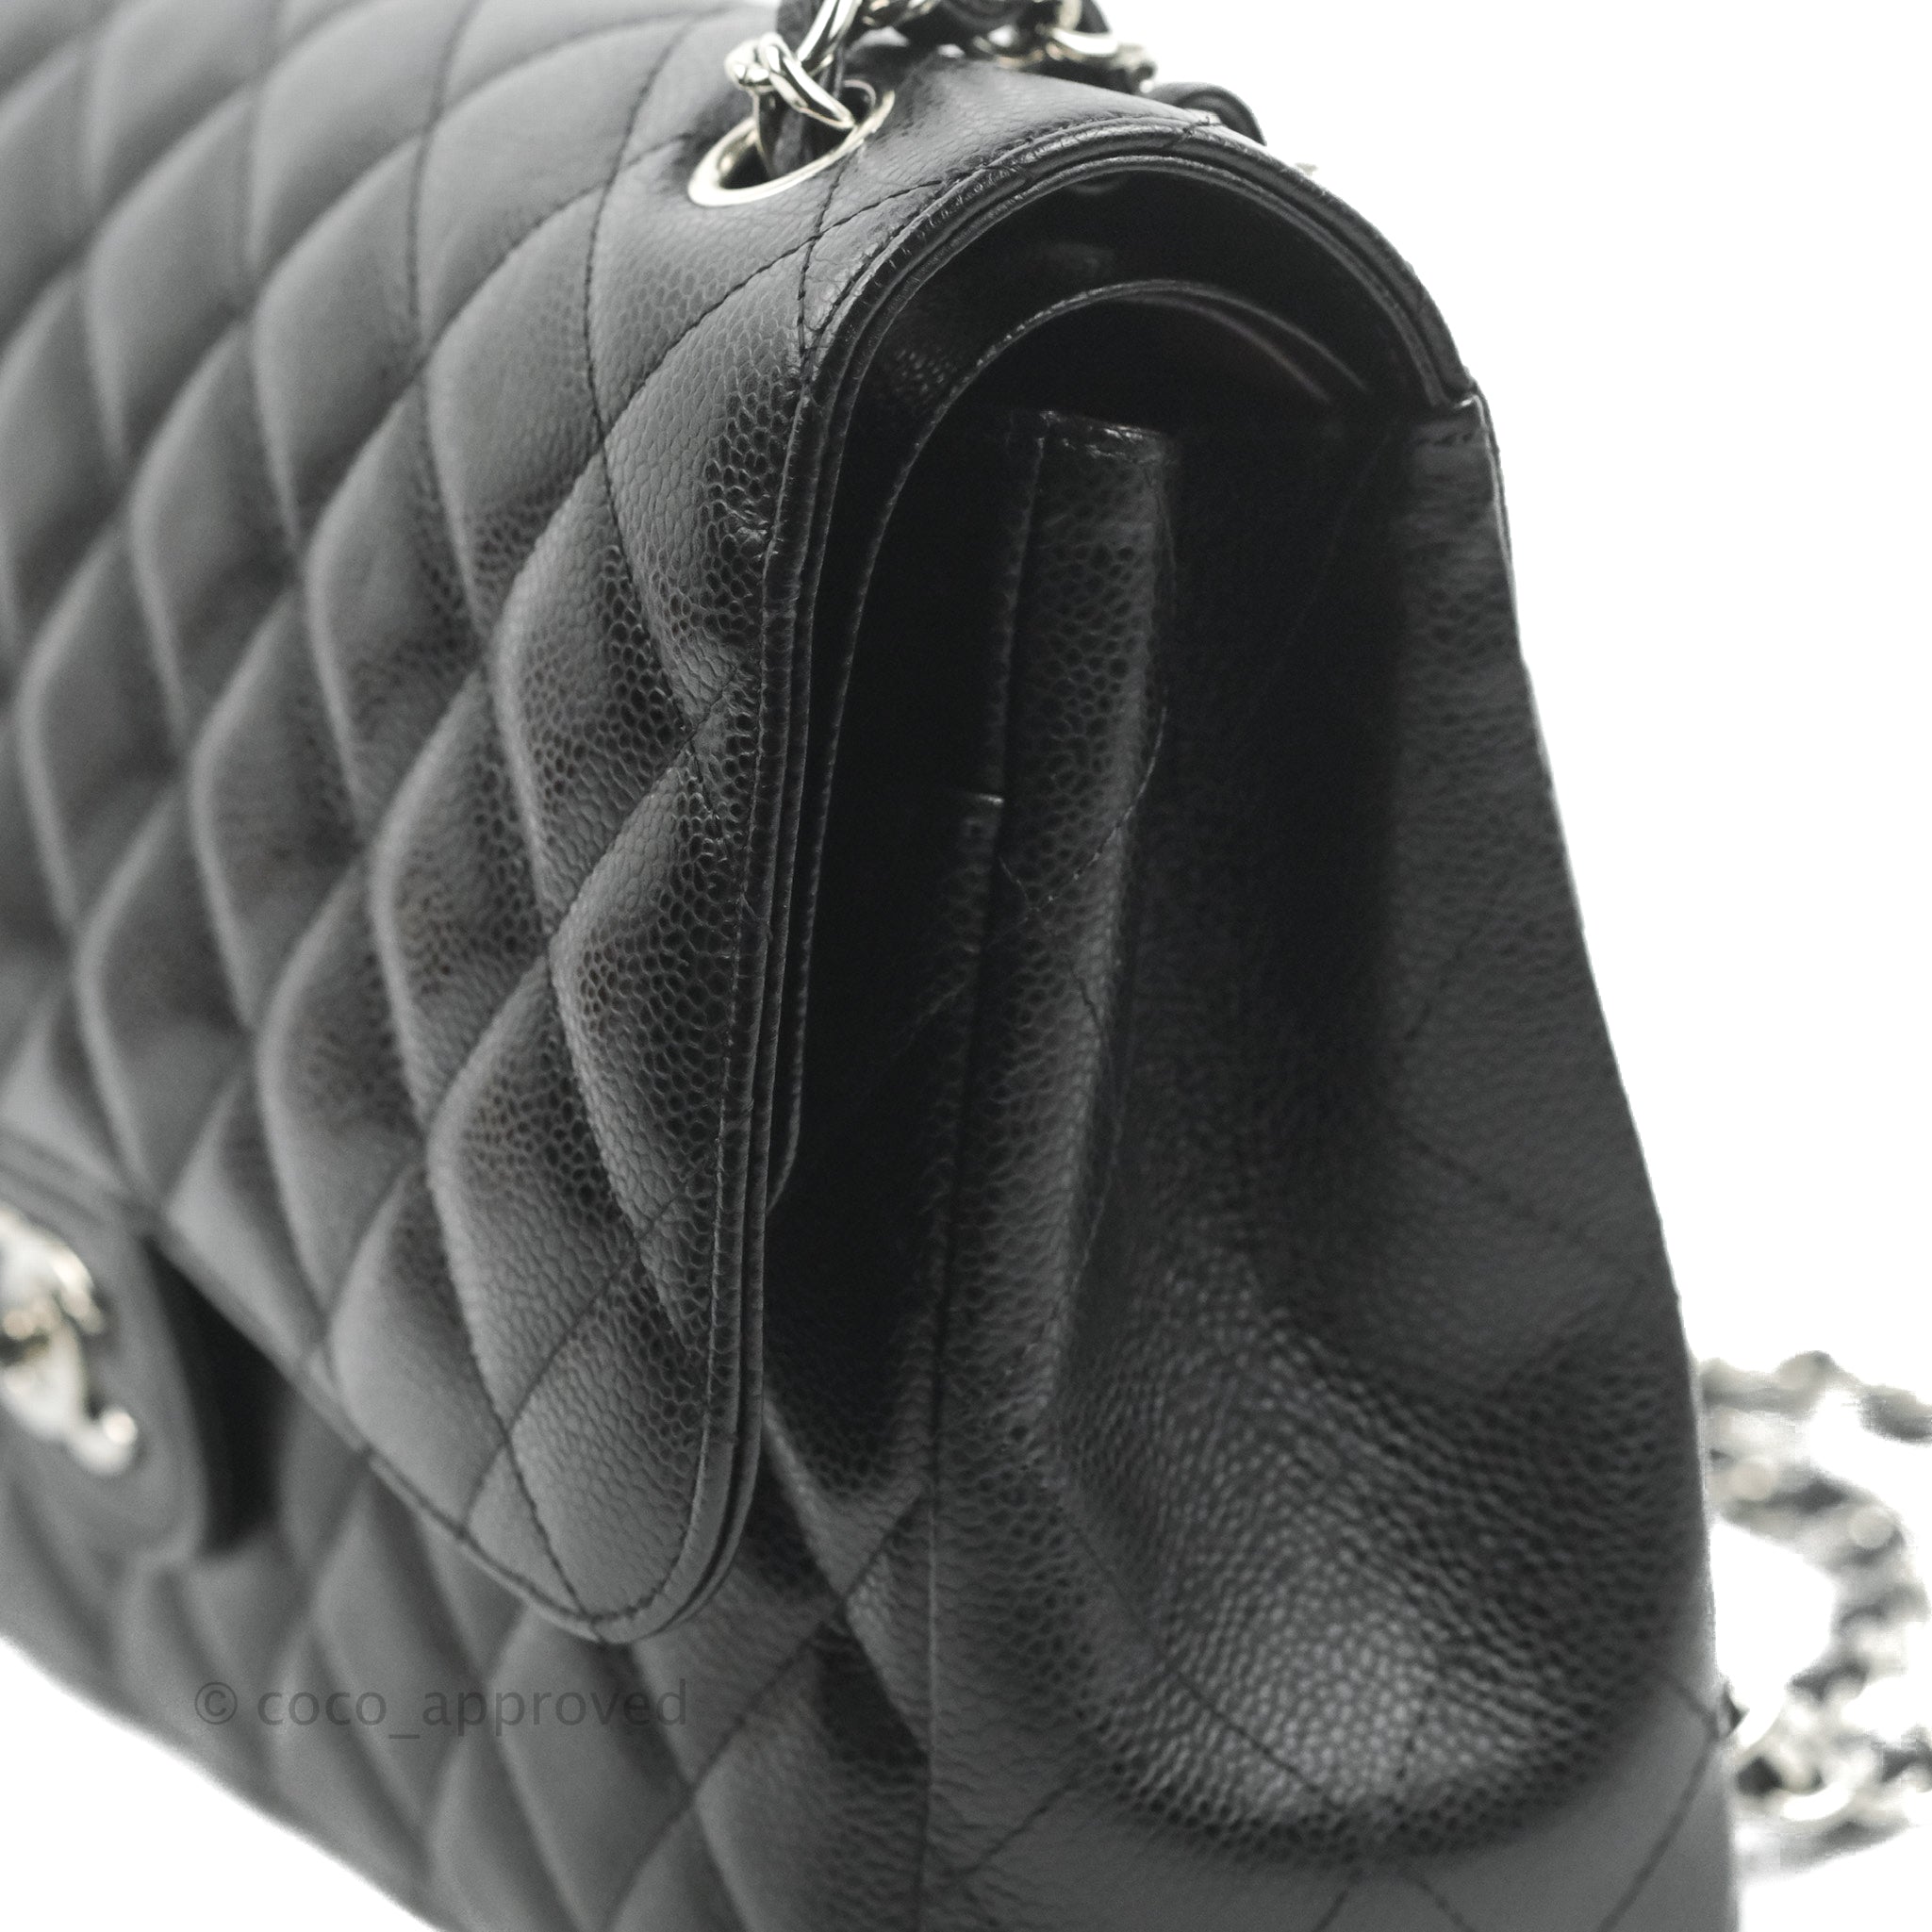 the 2.55 chanel bag black